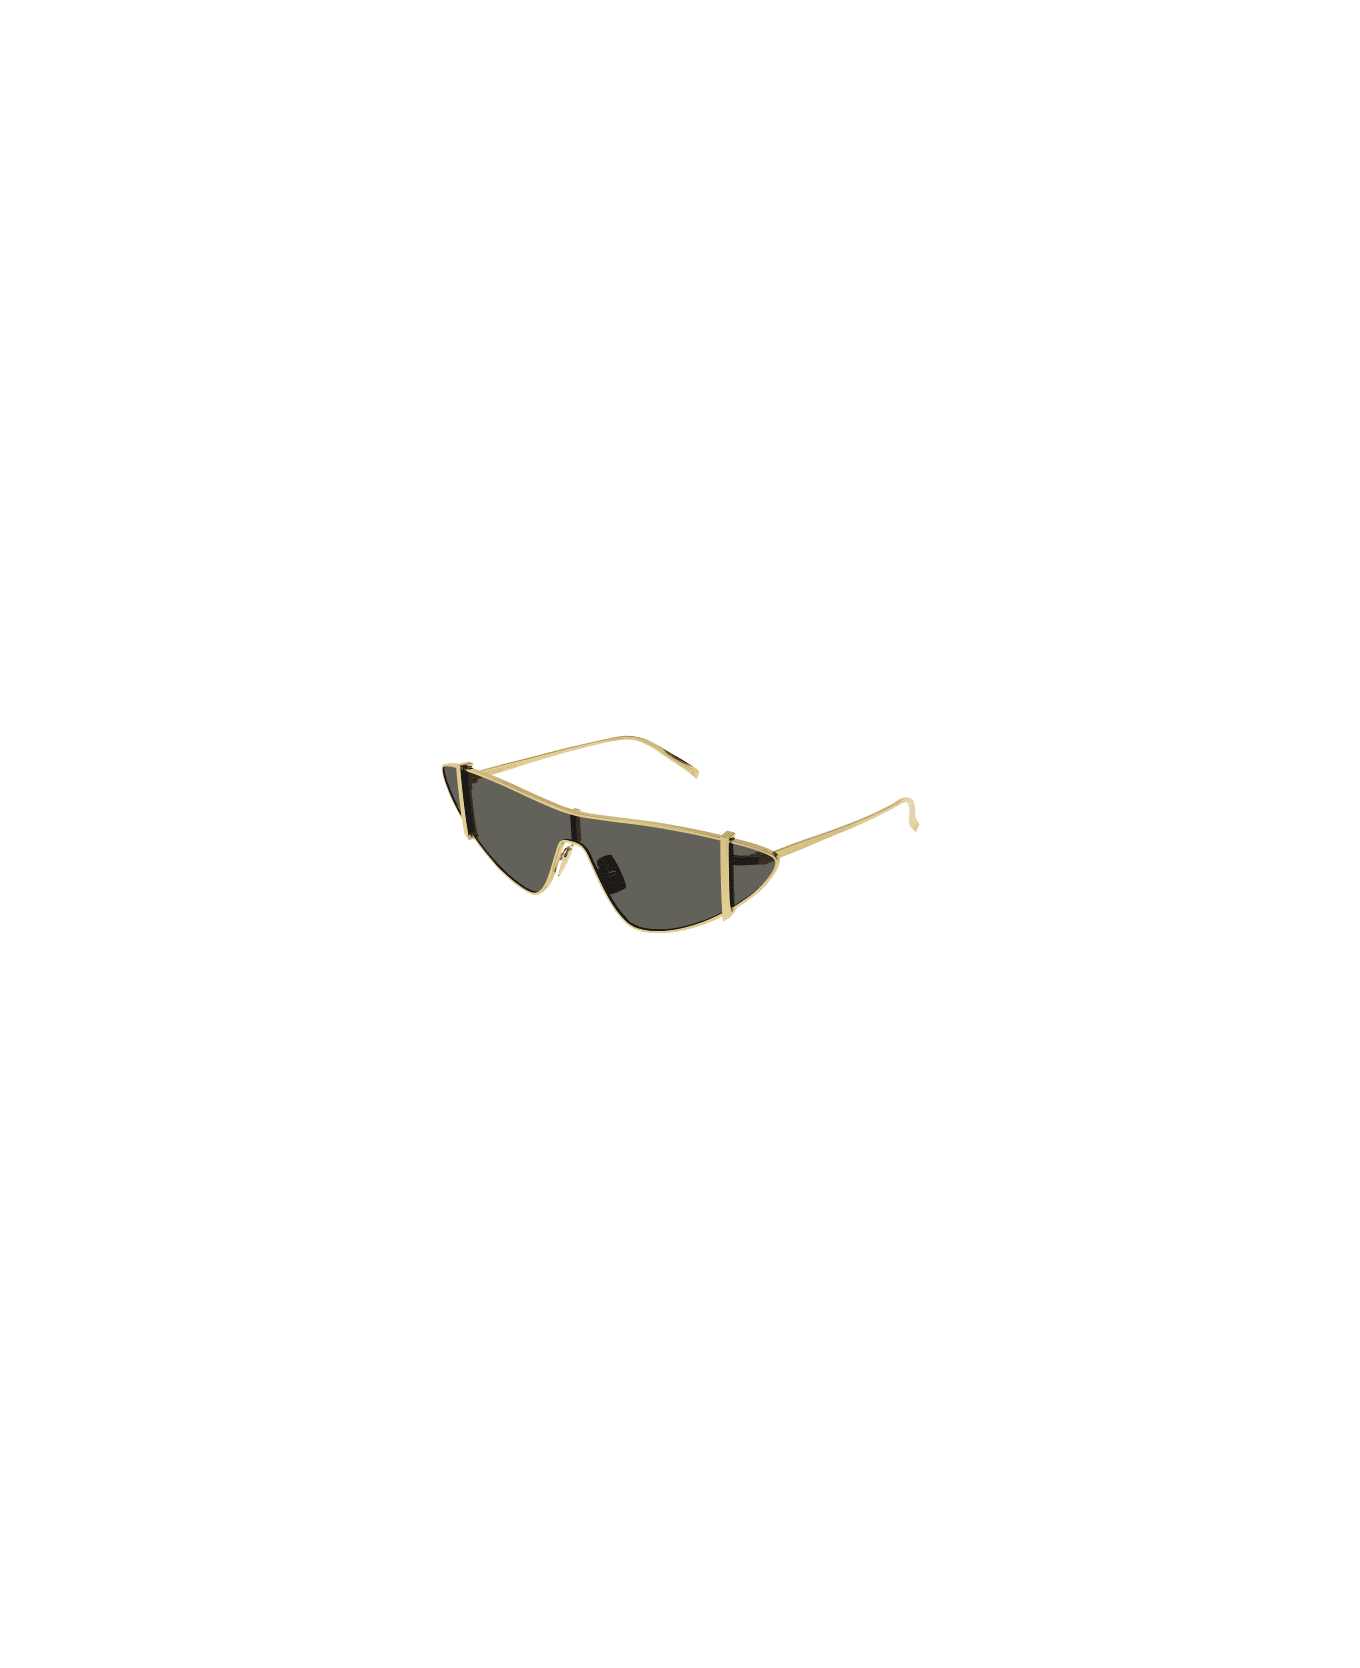 Saint Laurent Eyewear SL 536 Sunglasses - Gold Gold Grey